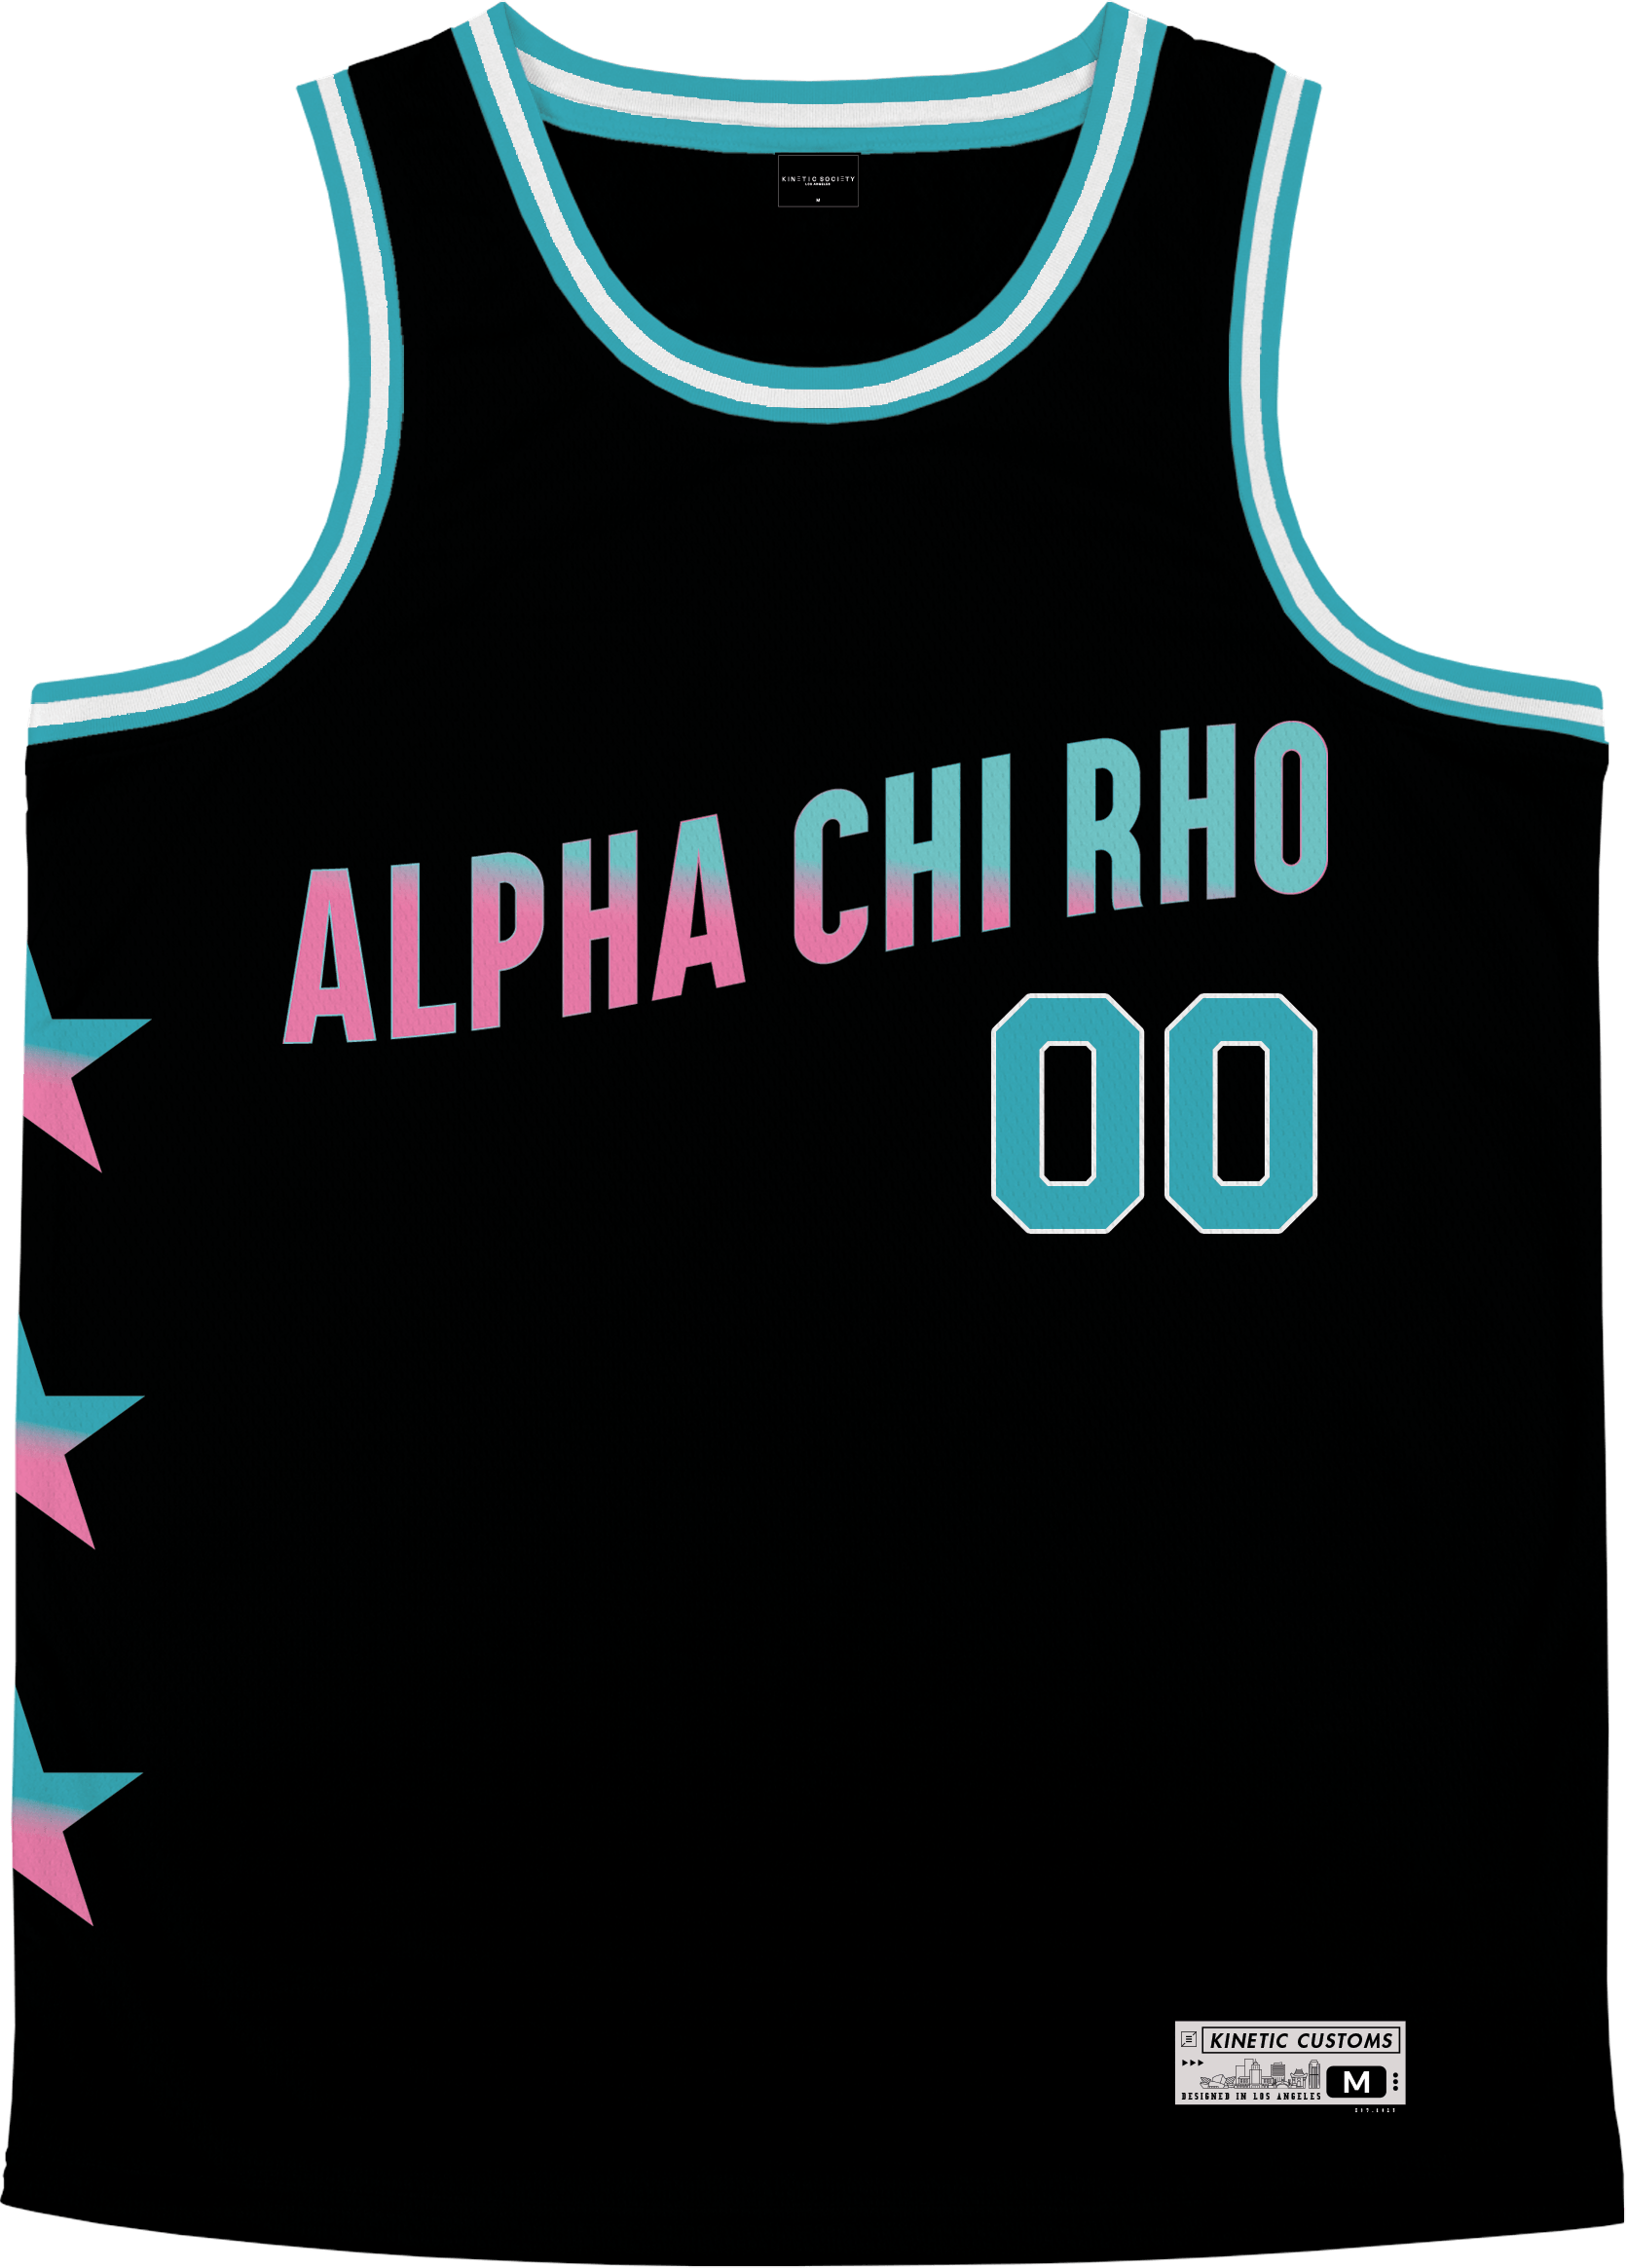 Alpha Chi Rho - Cotton Candy Basketball Jersey Premium Basketball Kinetic Society LLC 